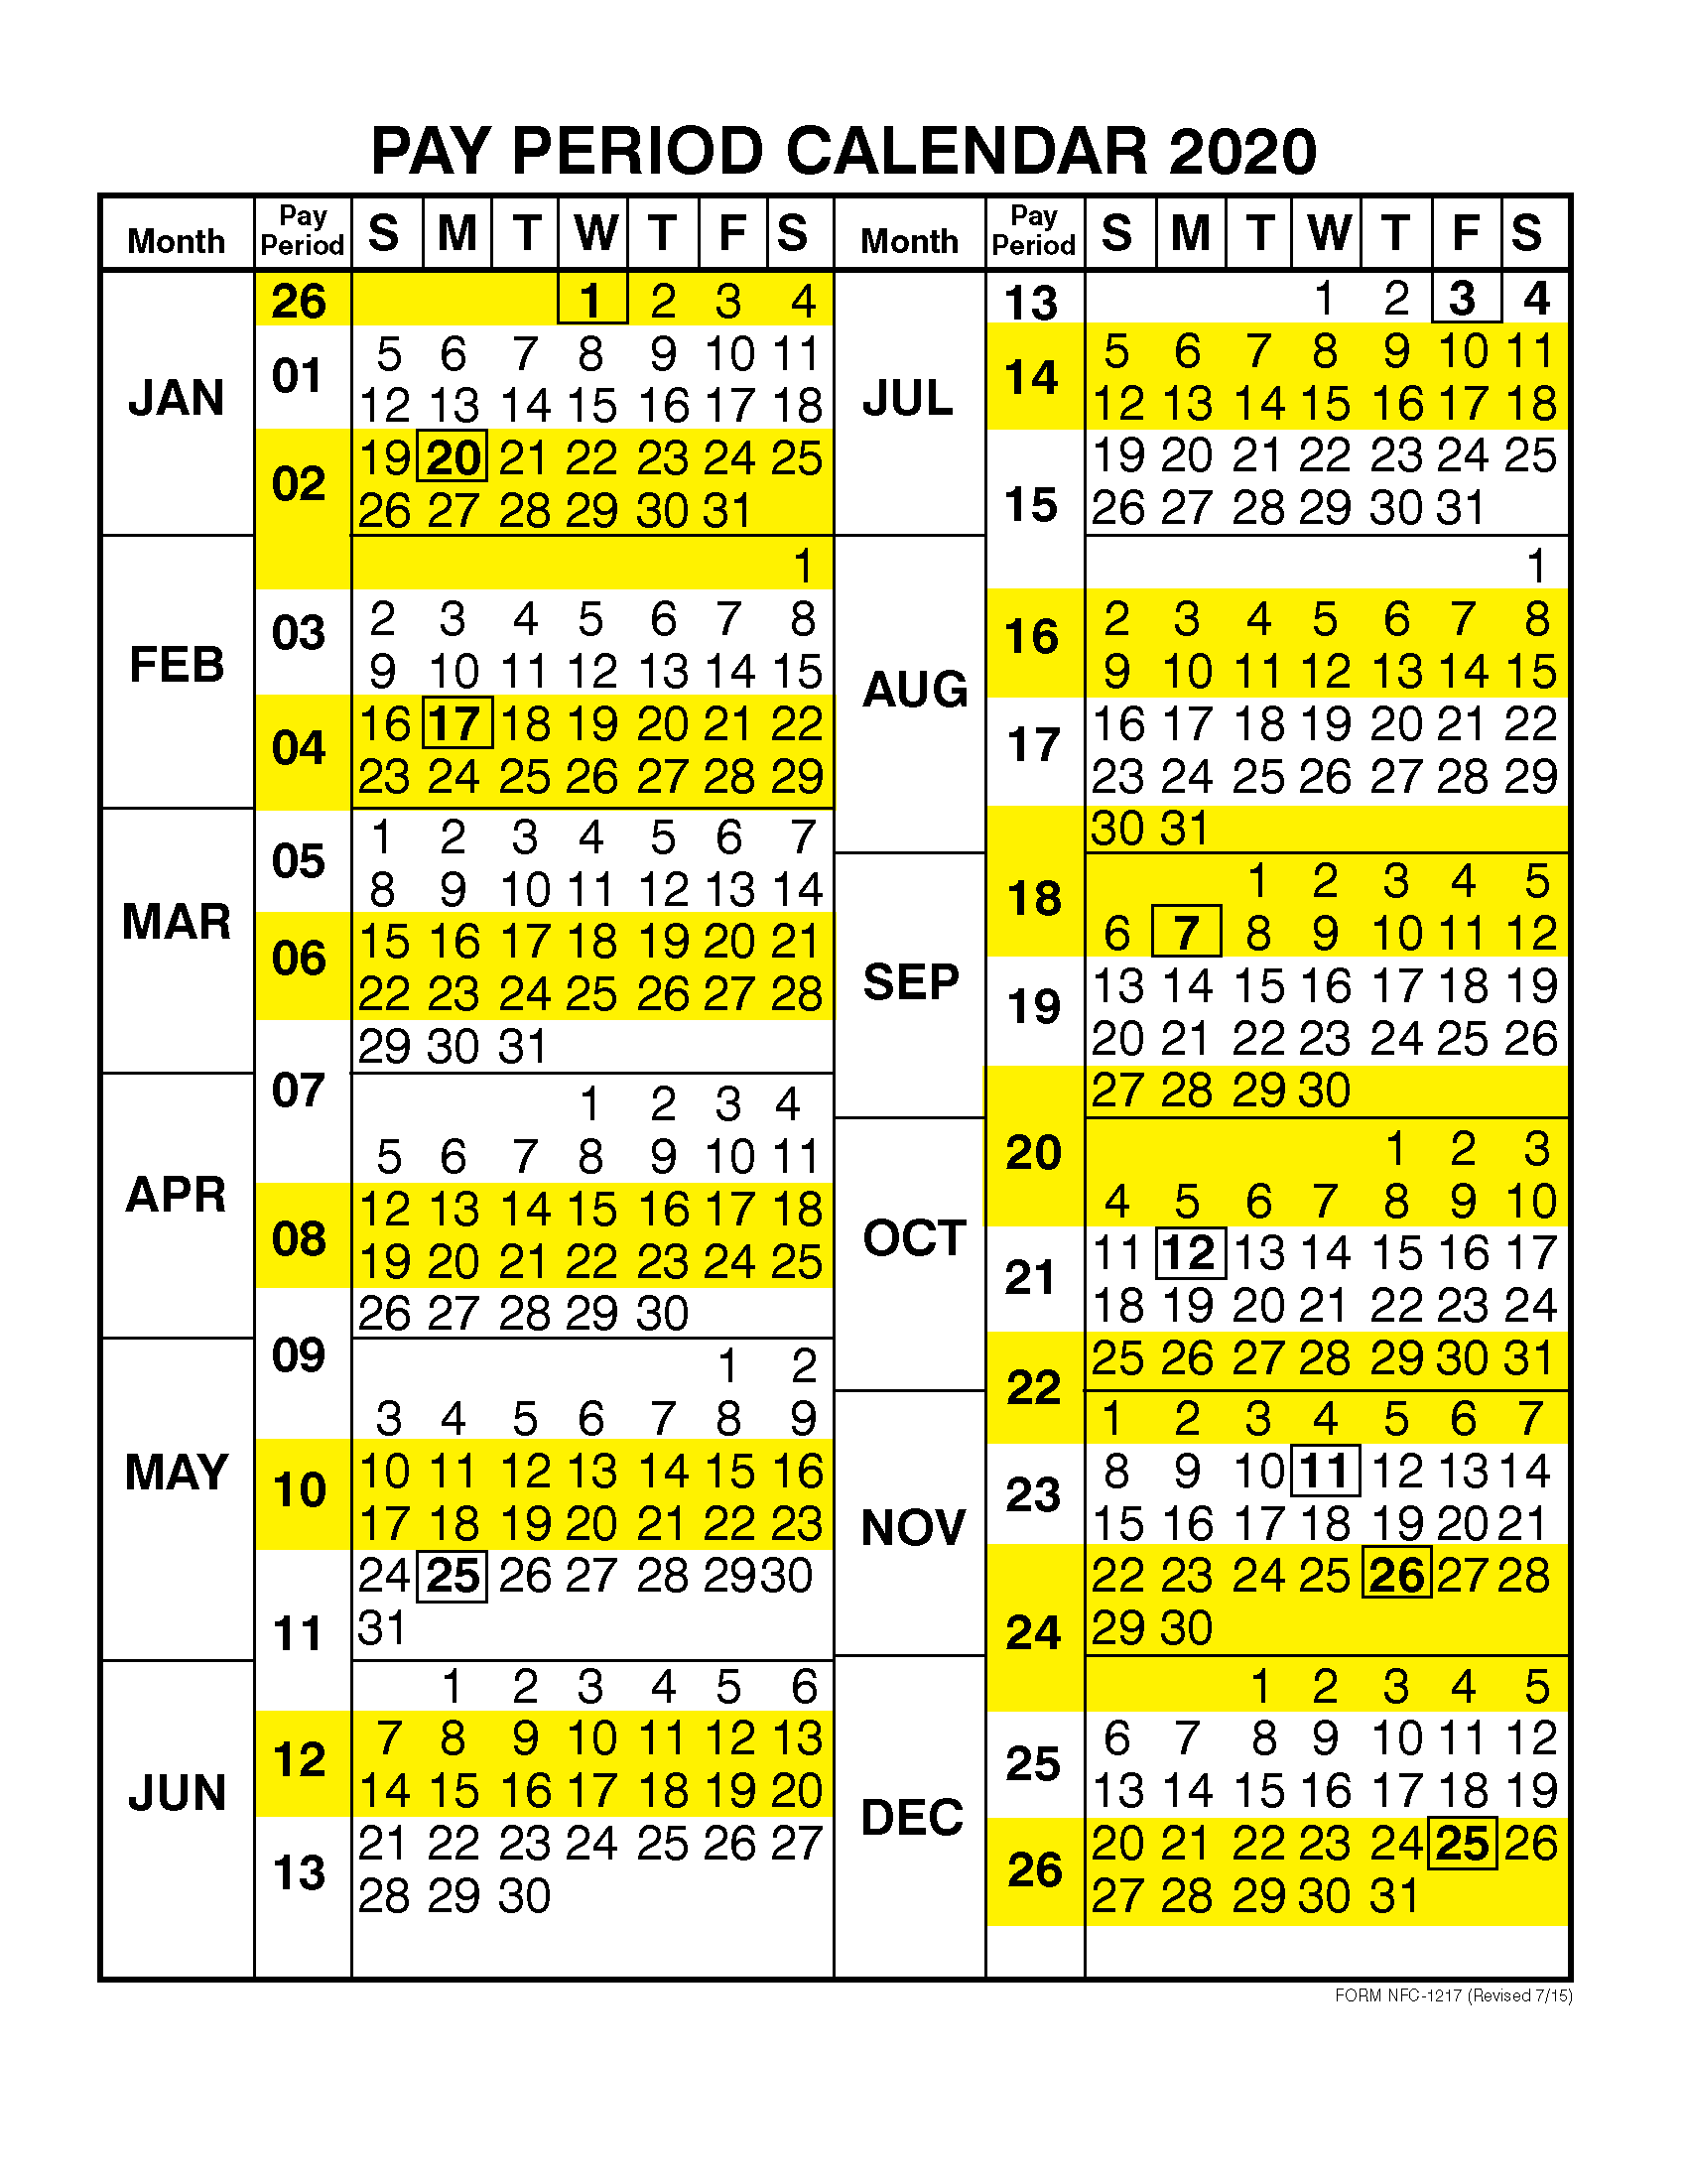 Pay Period Calendar 2020 By Calendar Year